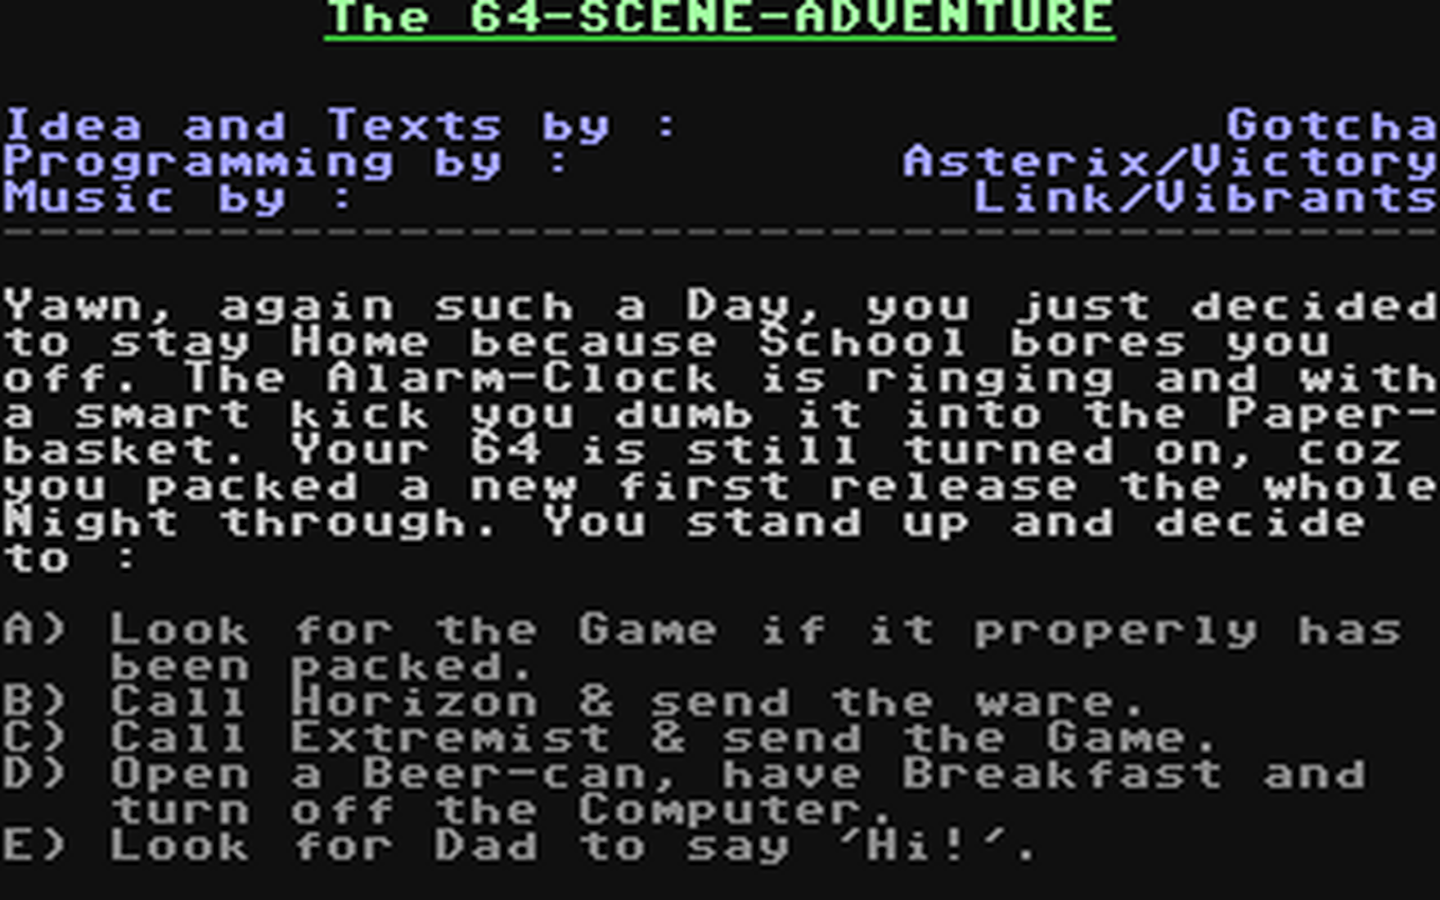 C64 GameBase 64-Scene-Adventure,_The (Not_Published)